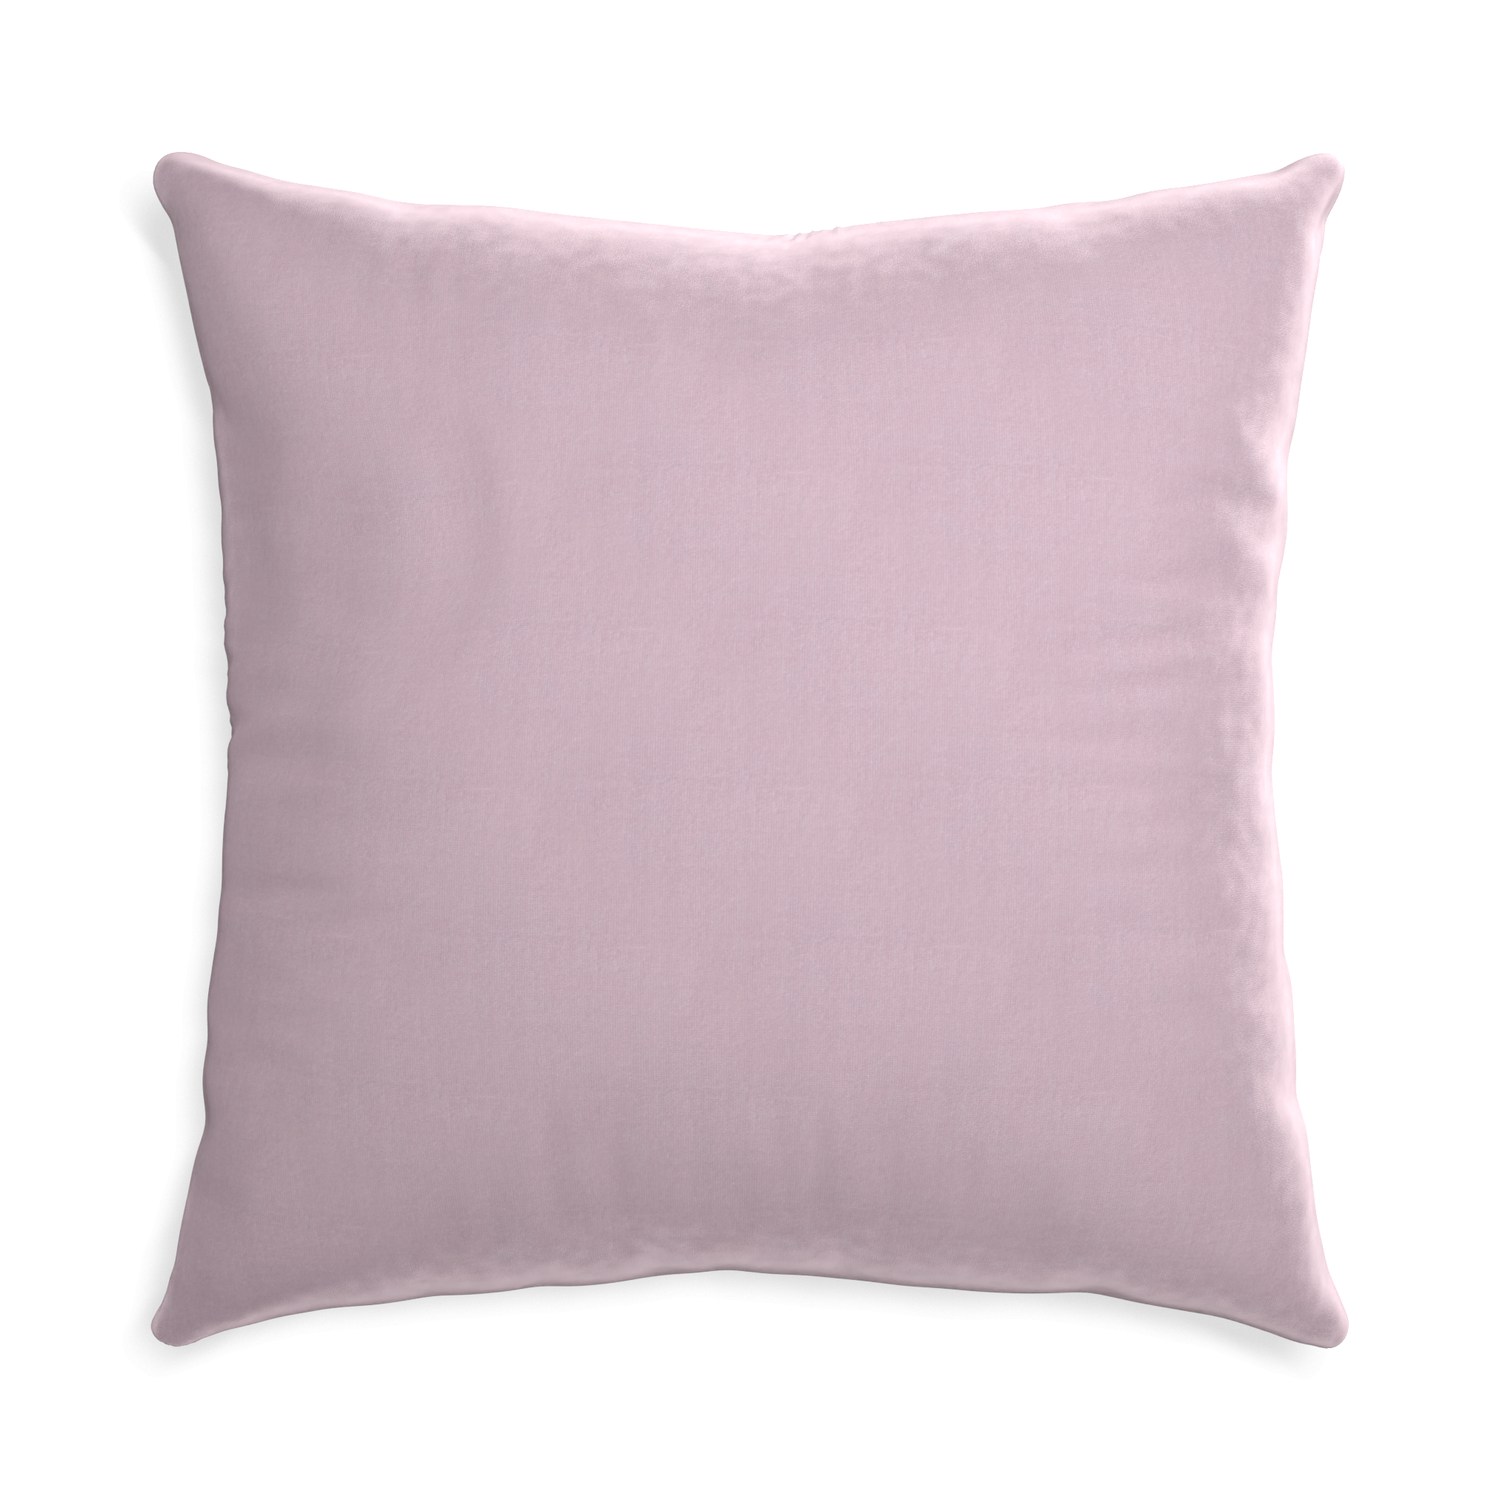 Euro-sham lilac velvet custom pillow with none on white background